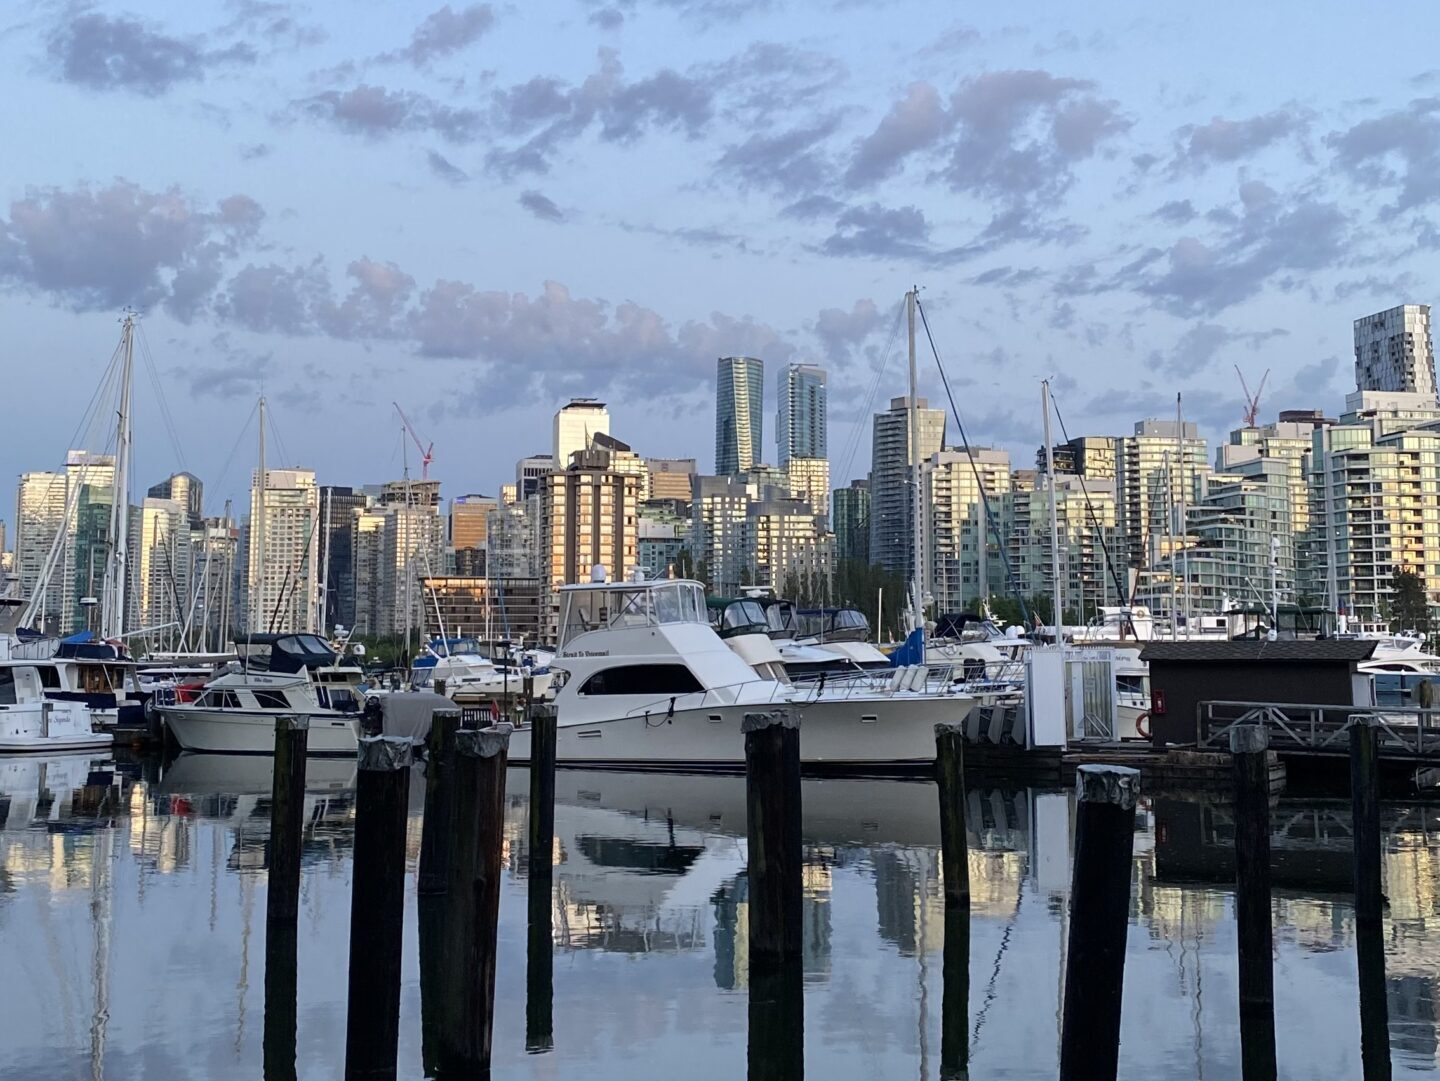 Coal Harbour, Vancouver